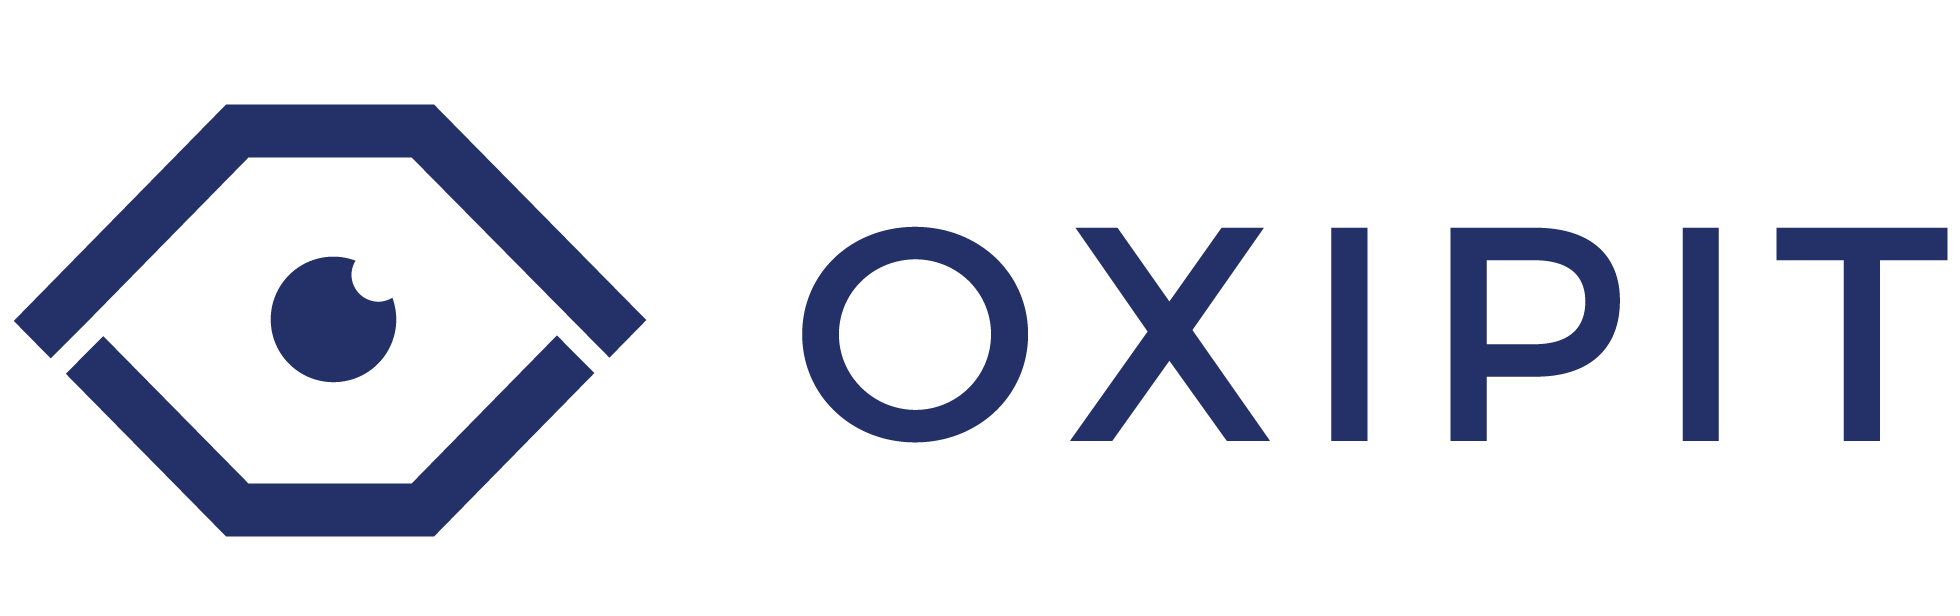 Oxipit logo